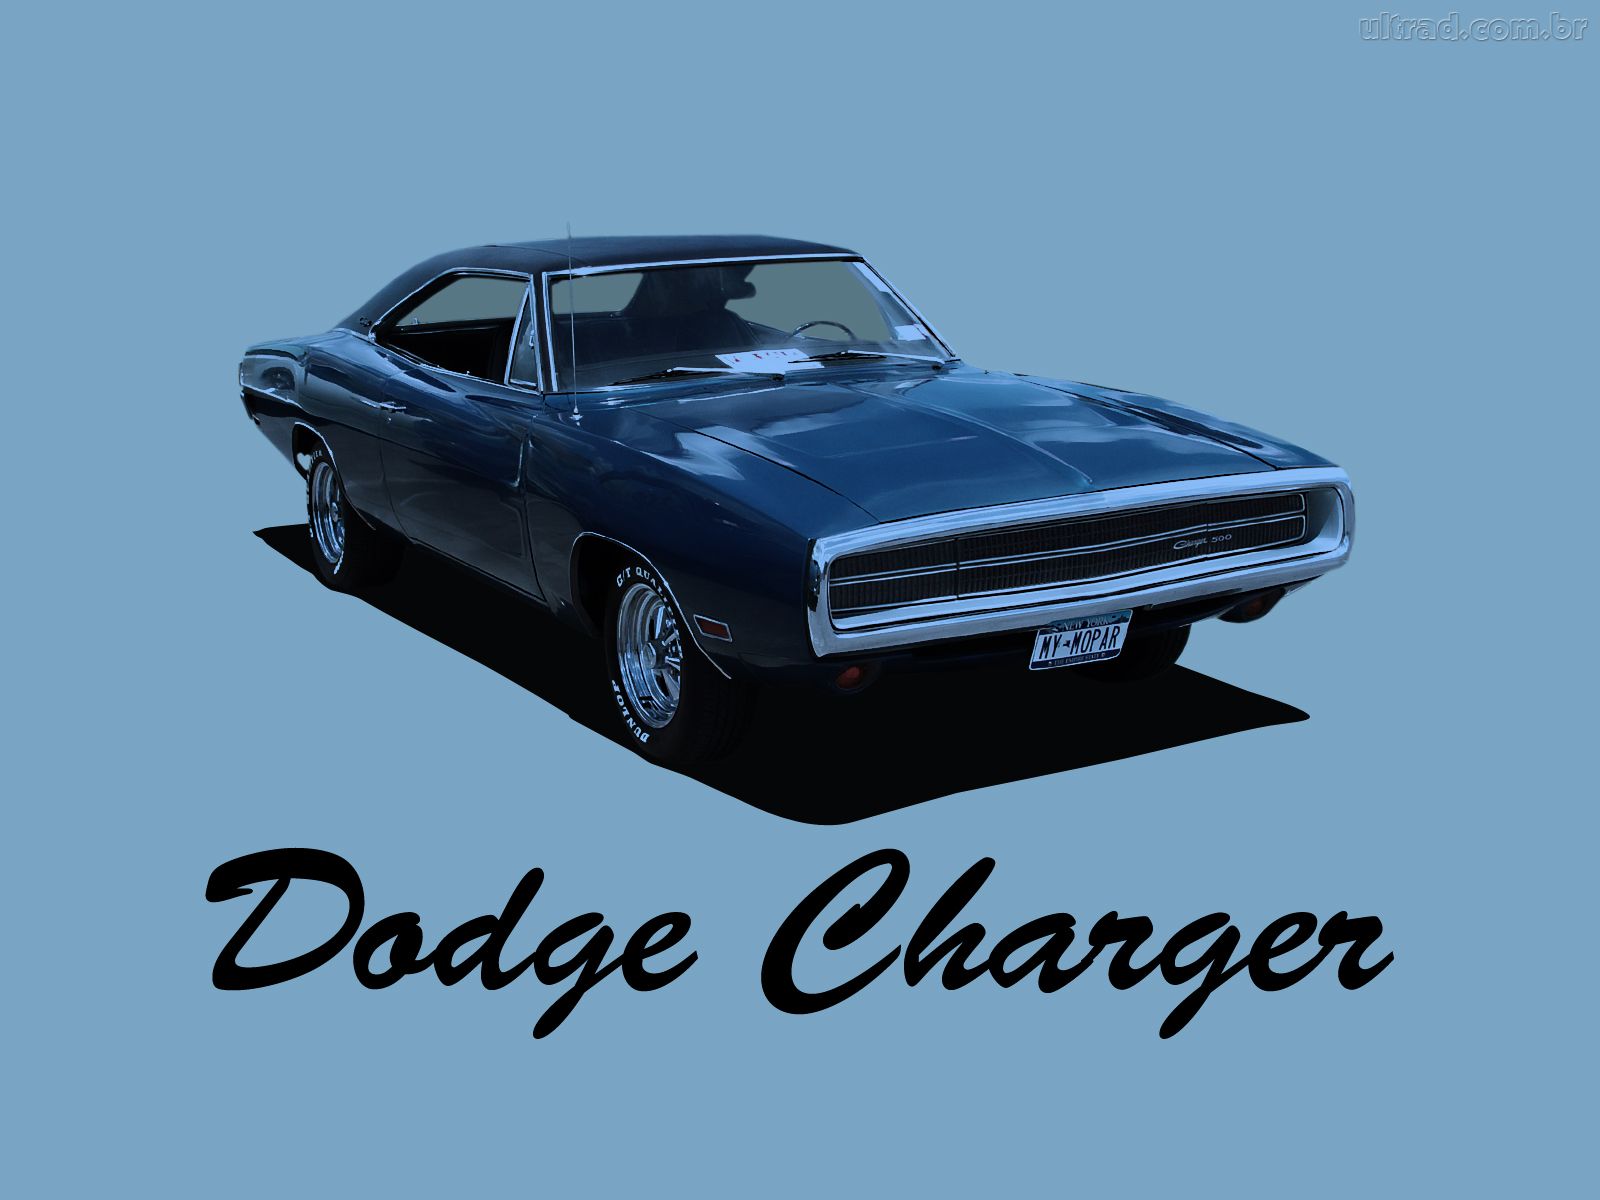 Dodge Charger Papeis De Parede Do Dogde Papel